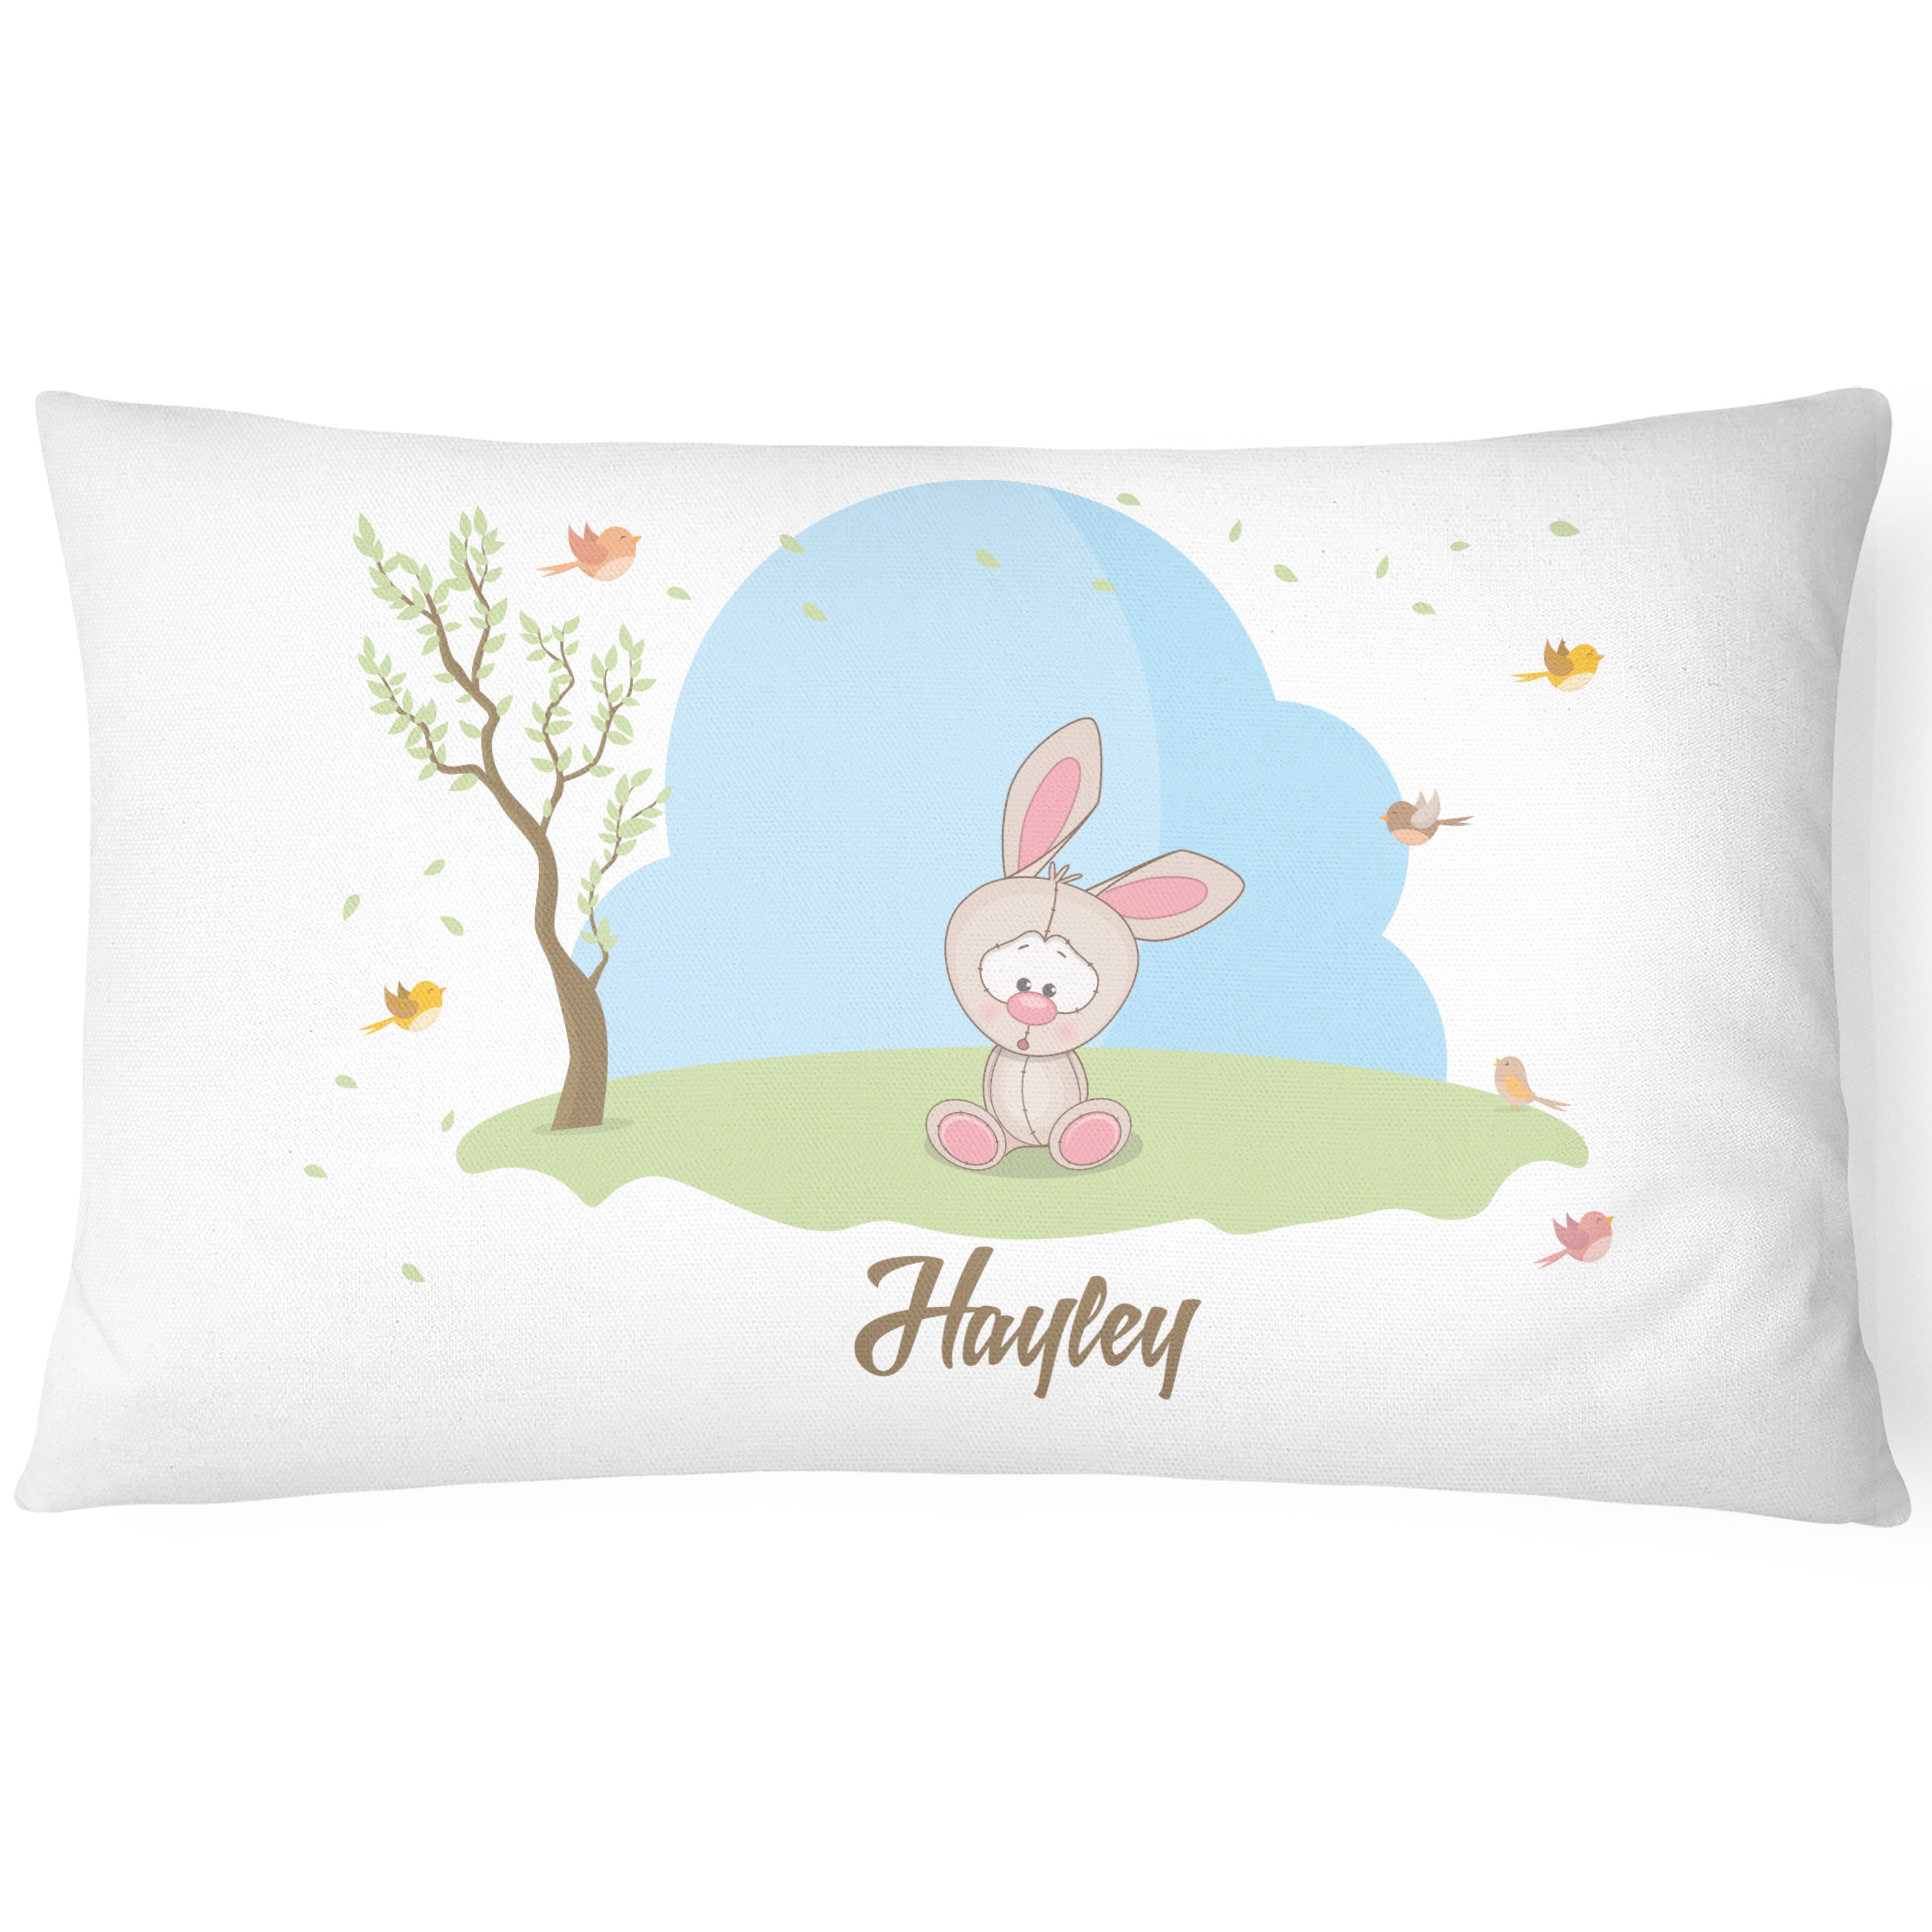 Personalised Children's Pillowcase Cute Animal - Charming